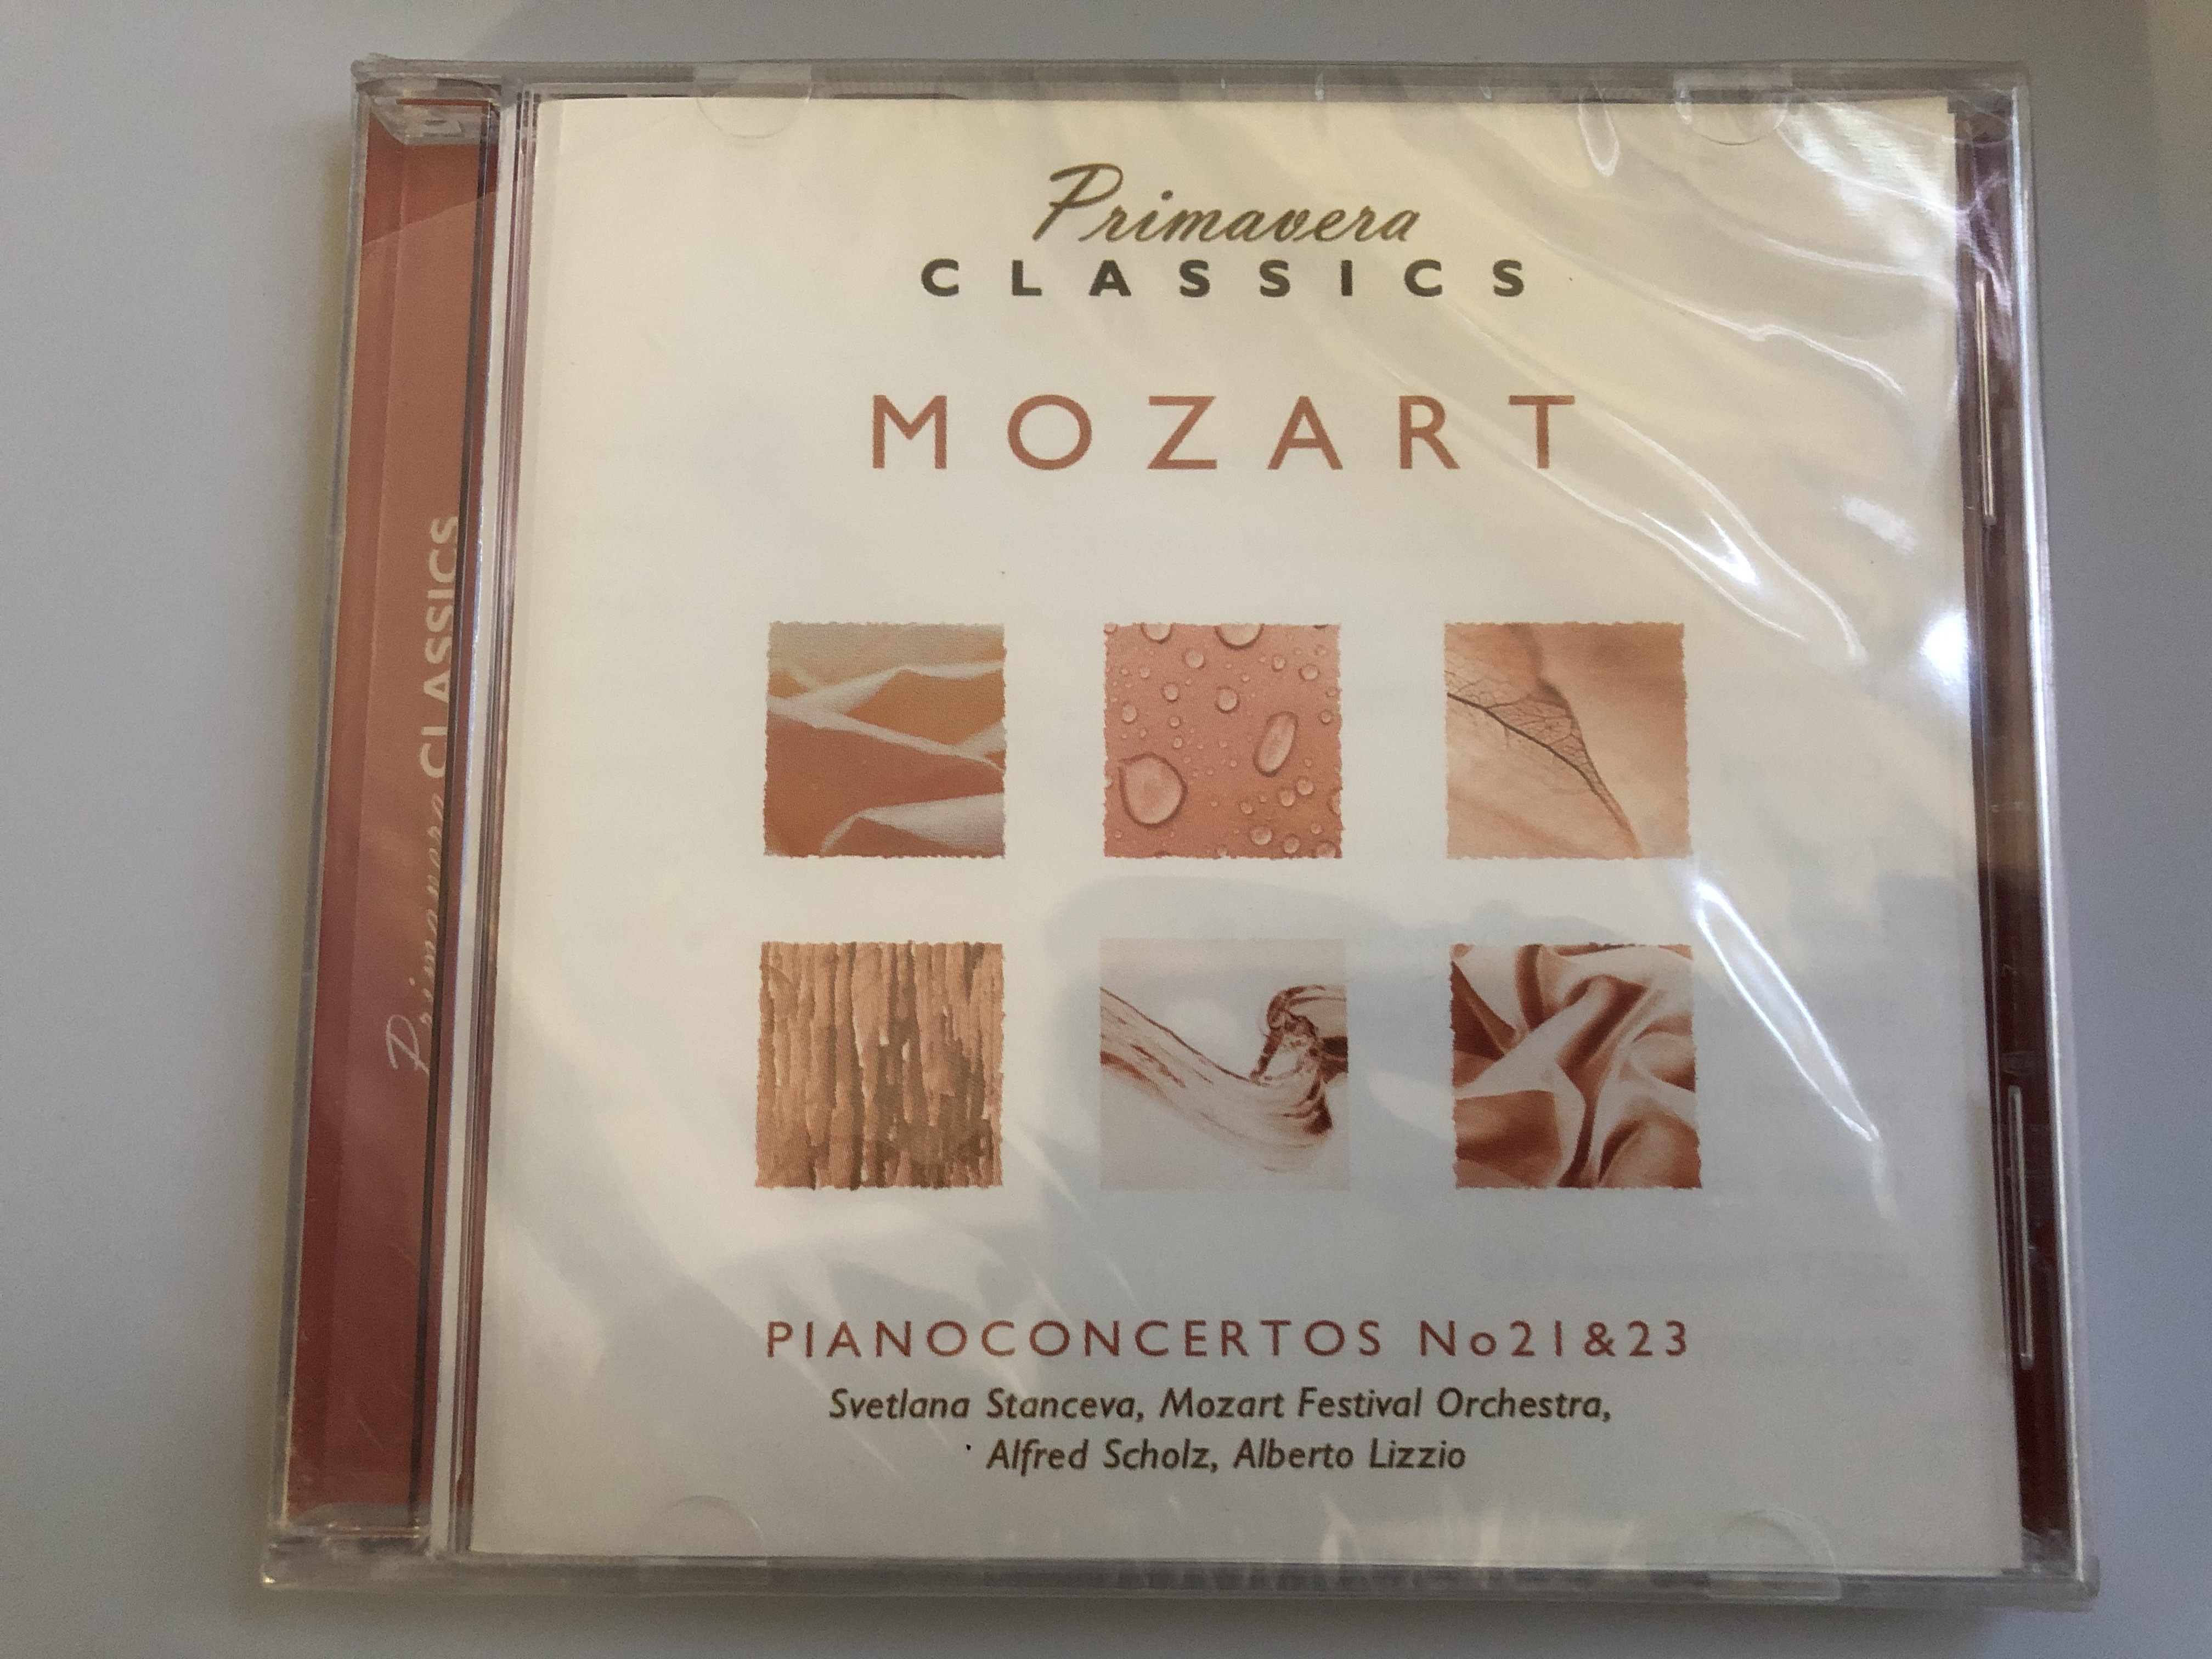 primavera-classics-mozart-pianoconcertos-no-21-23-svetlana-stanceva-mozart-festival-orchestra-alfred-scholz-alberta-lizzia-luxury-multimedia-audio-cd-2006-3516072-1-.jpg